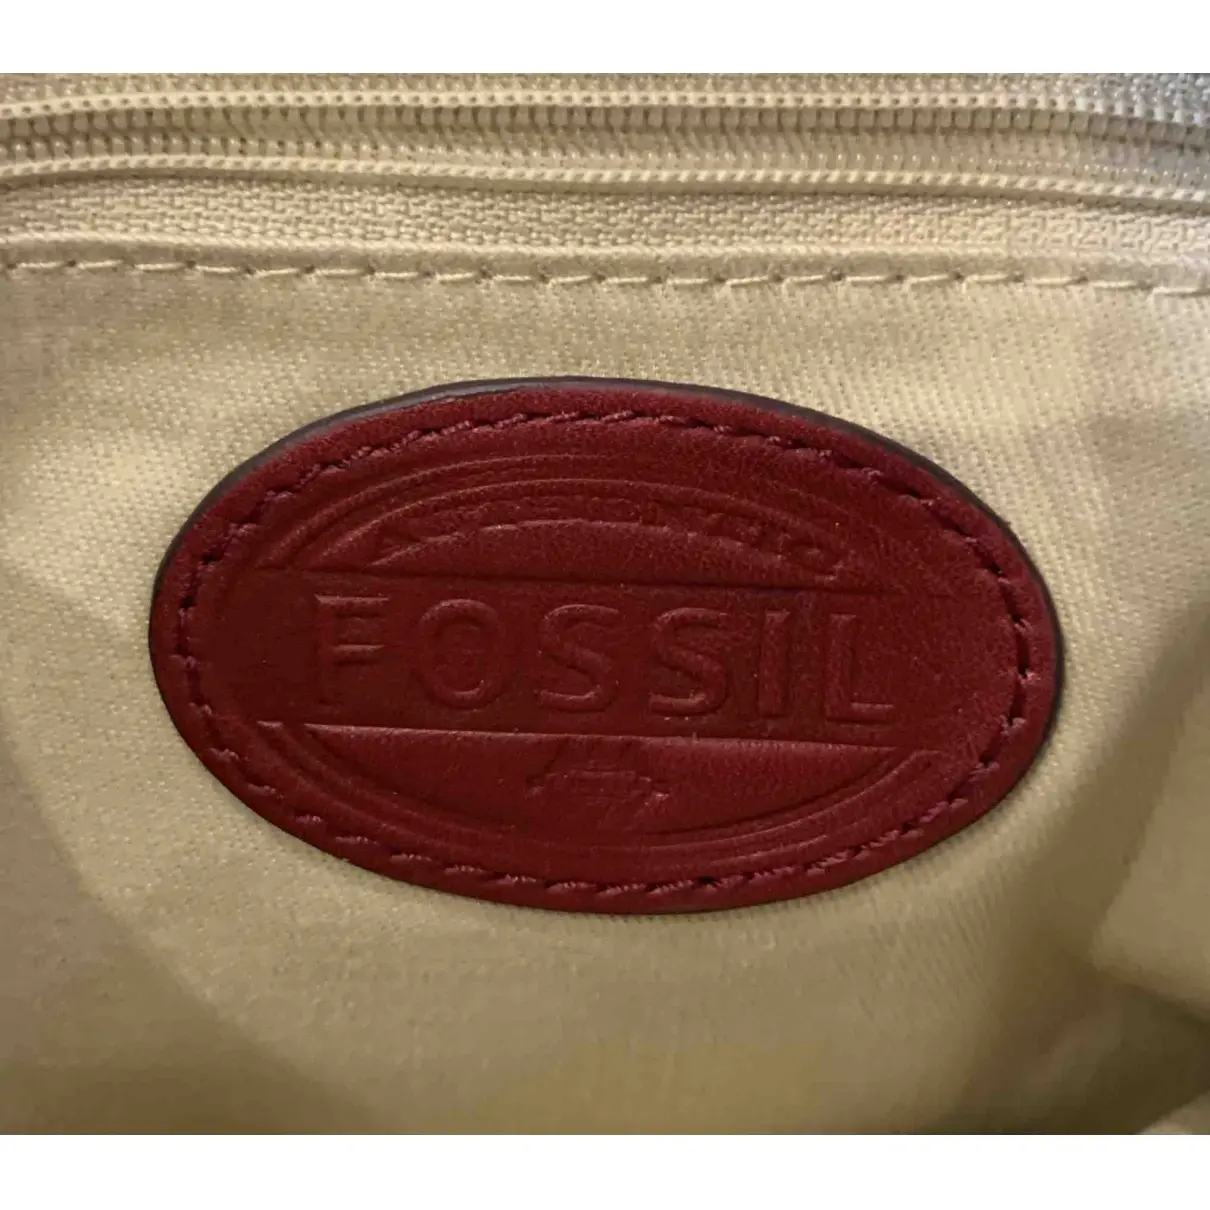 Buy Fossil Leather handbag online